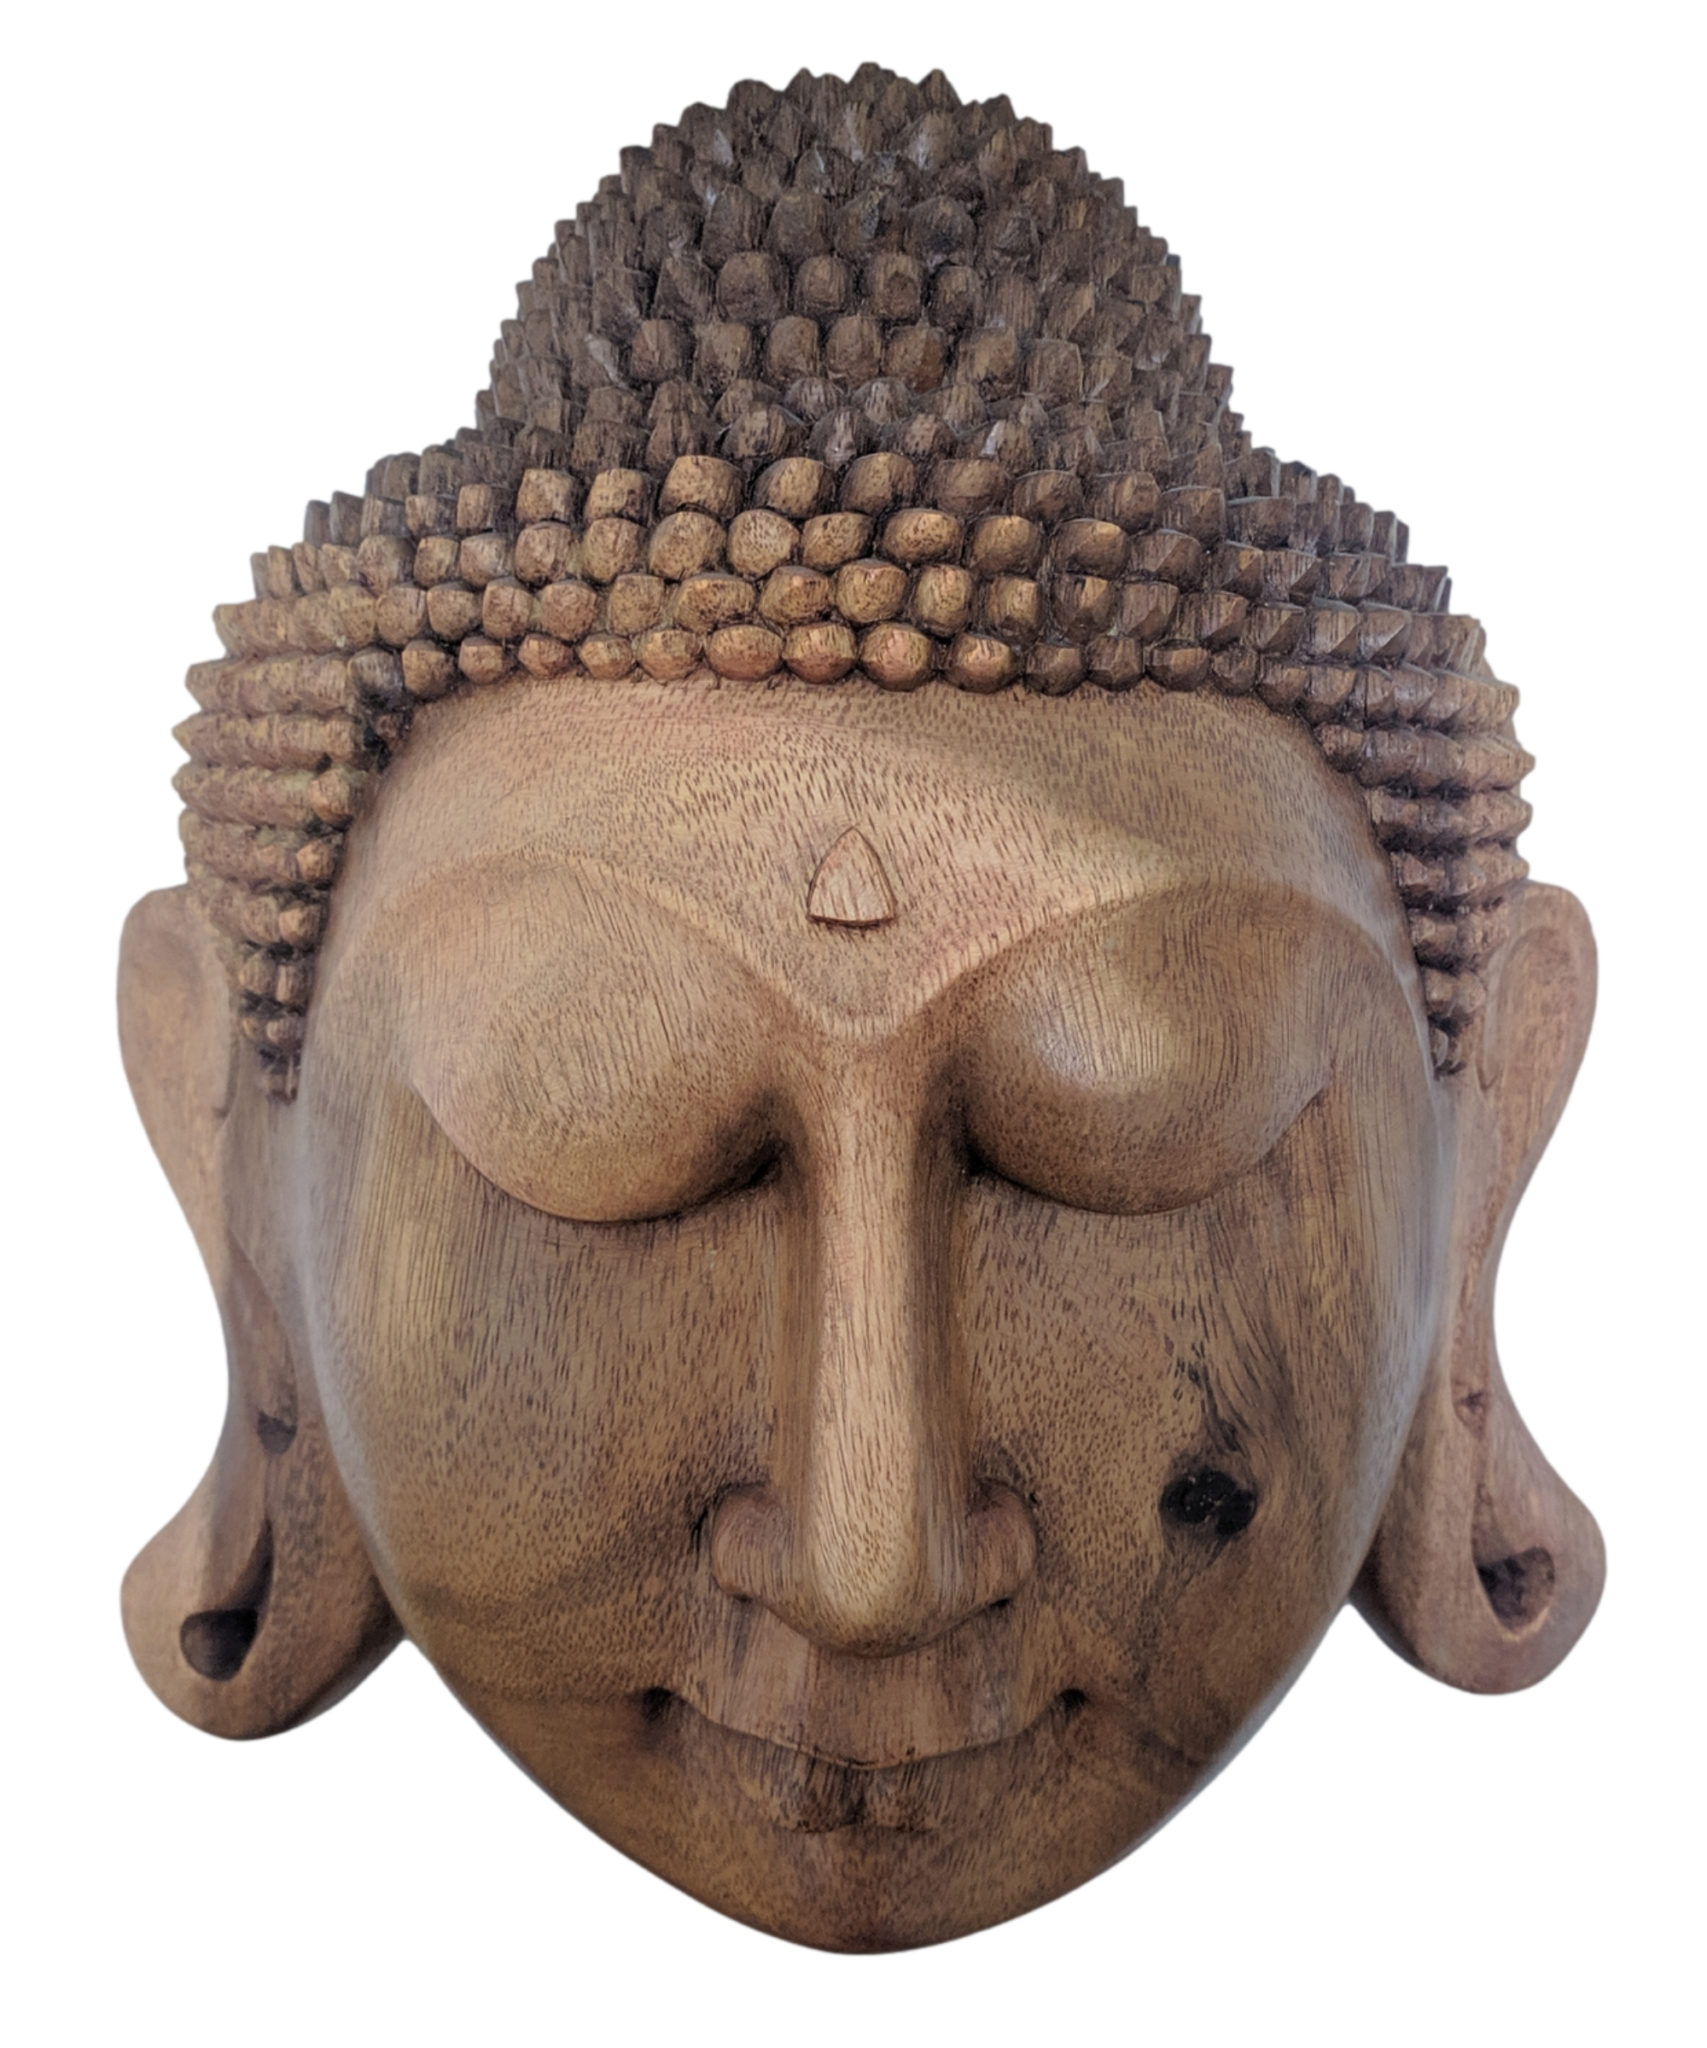 decaan Strippen Dokter Handgemaakt Boeddhabeeld uit Bali – Boeddha hoofd uit tropisch hout 30 cm |  Inspiring Minds - ThuisindeTuin.nl